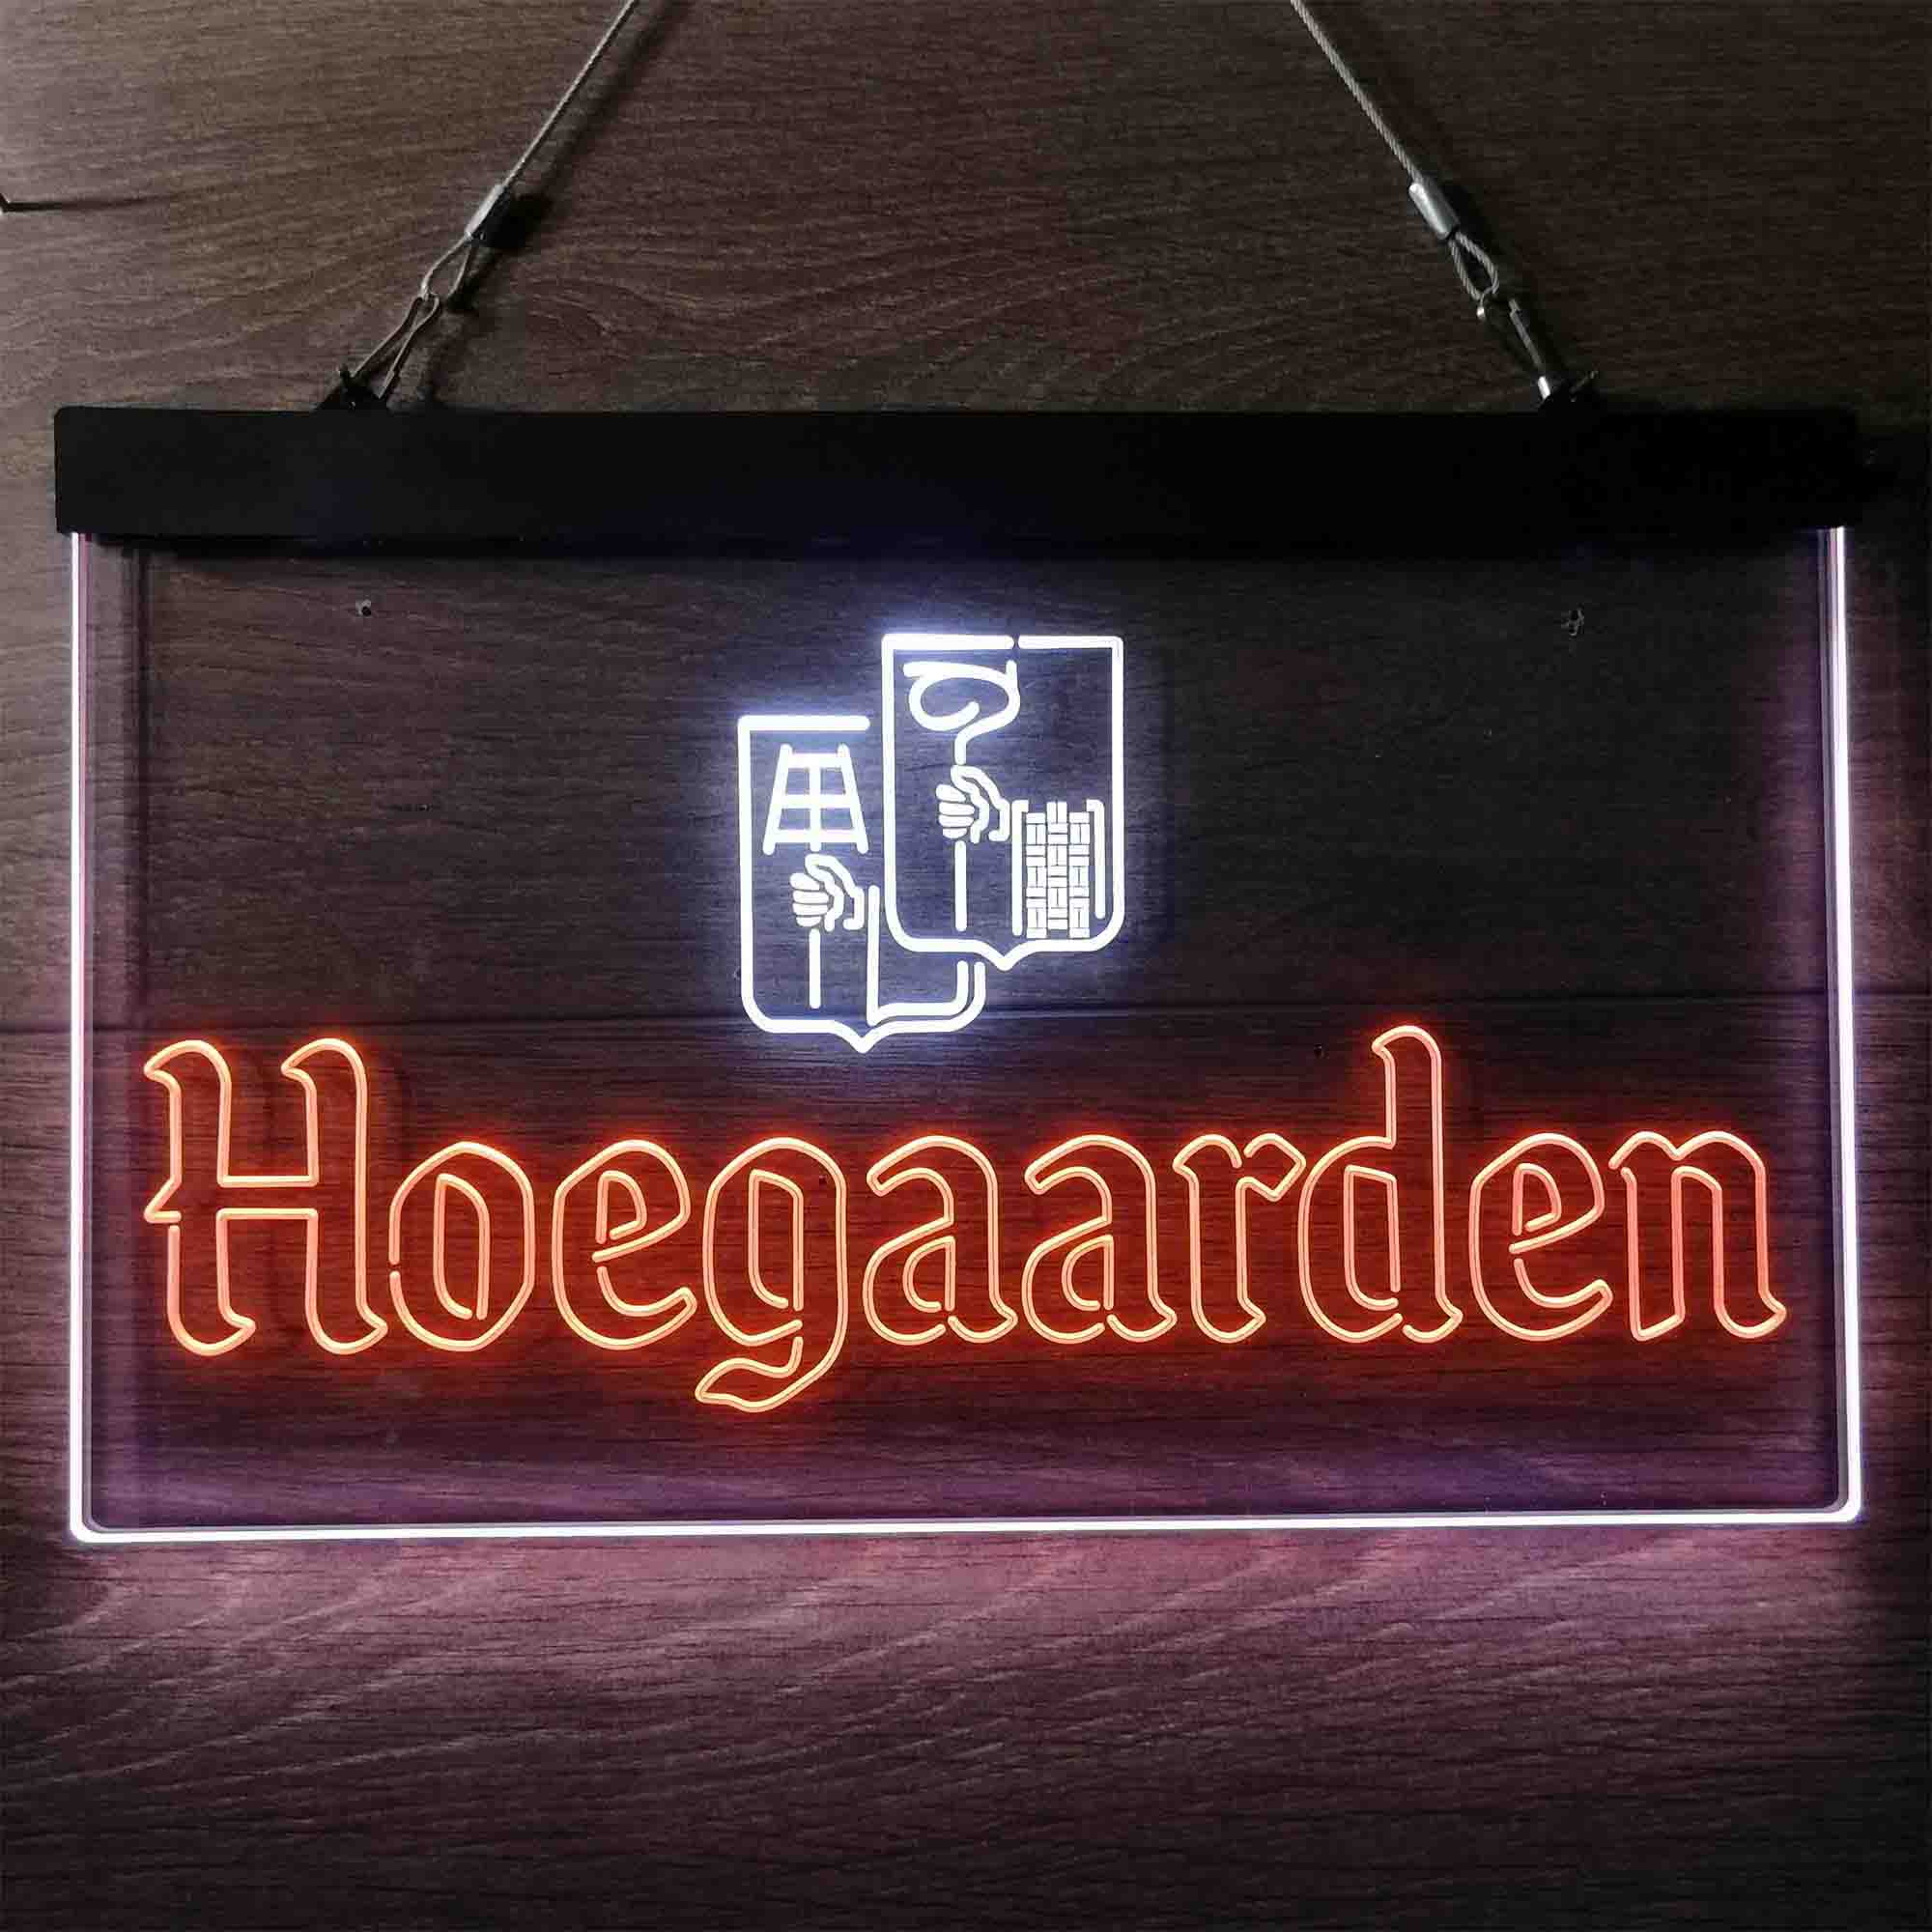 Hoegaarden Wheat Beer Neon-Like LED Sign